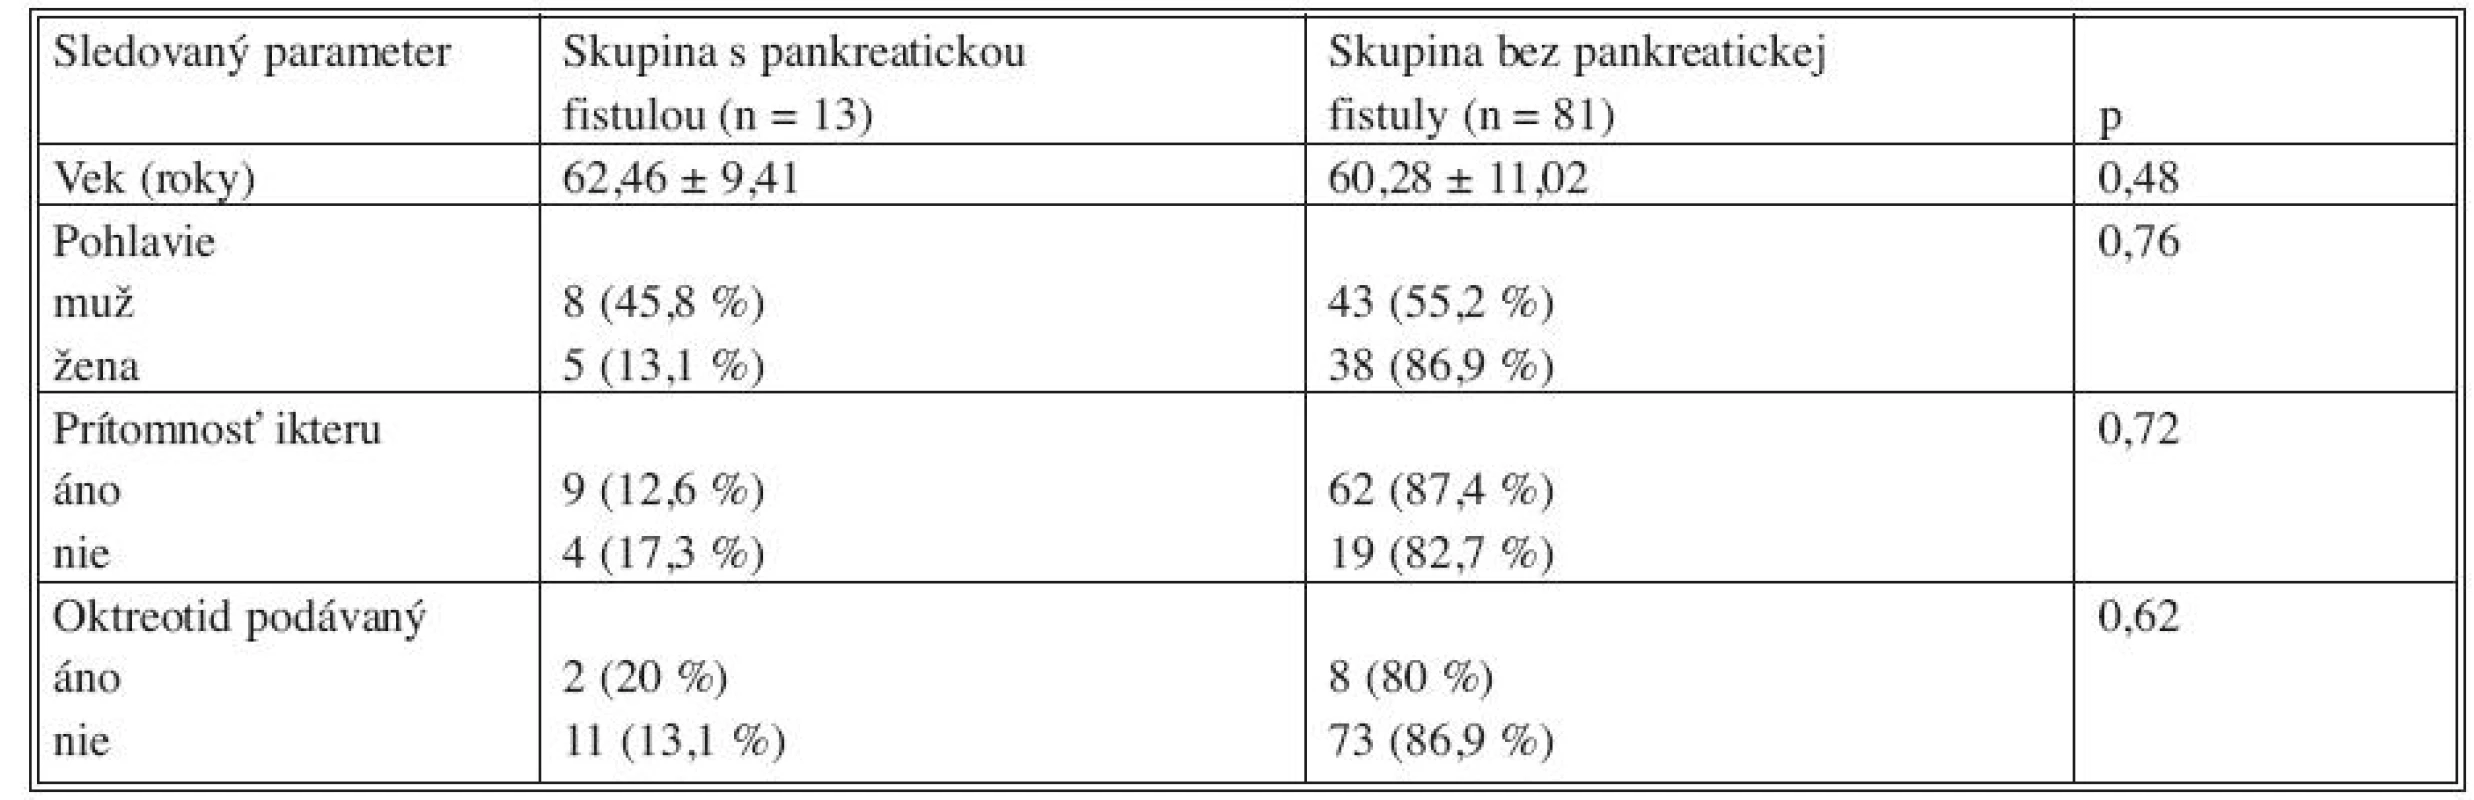 Všeobecné rizikové faktory vzniku pankreatickej fistuly
Tab. 6. General risk factors for pancreatic leakage